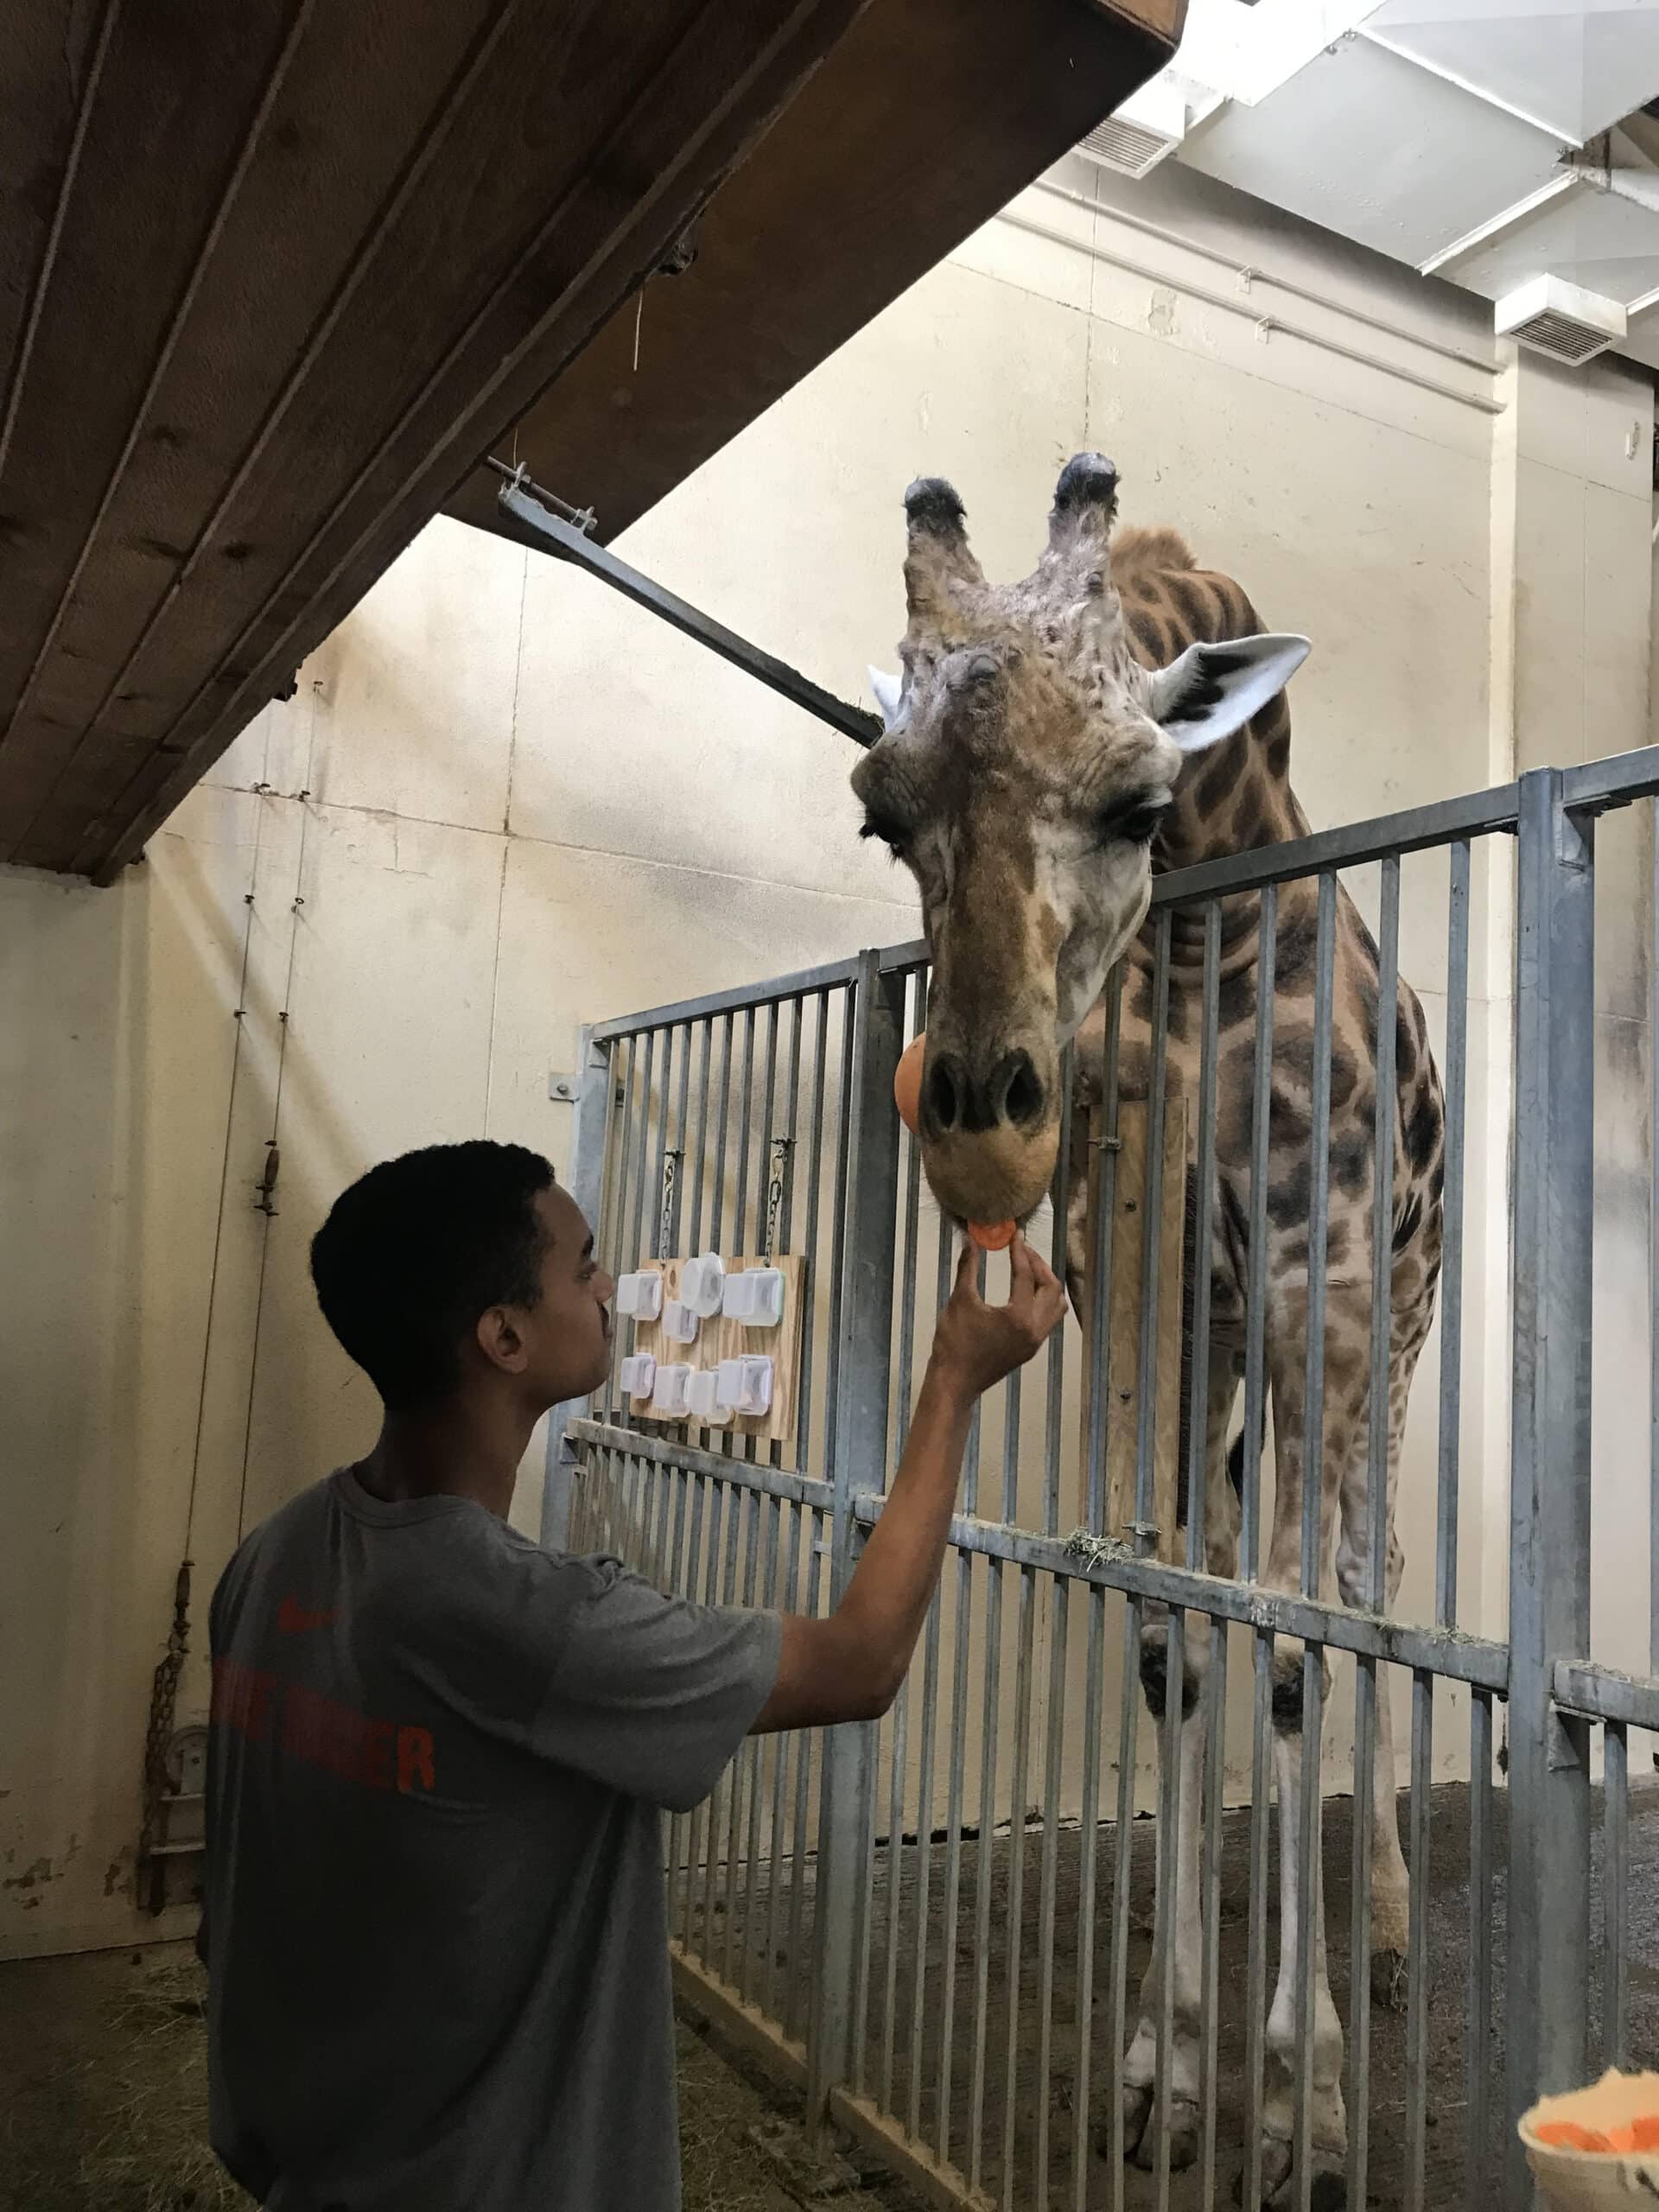 Pierre Bernard with a giraffe at the Caldwell Zoo